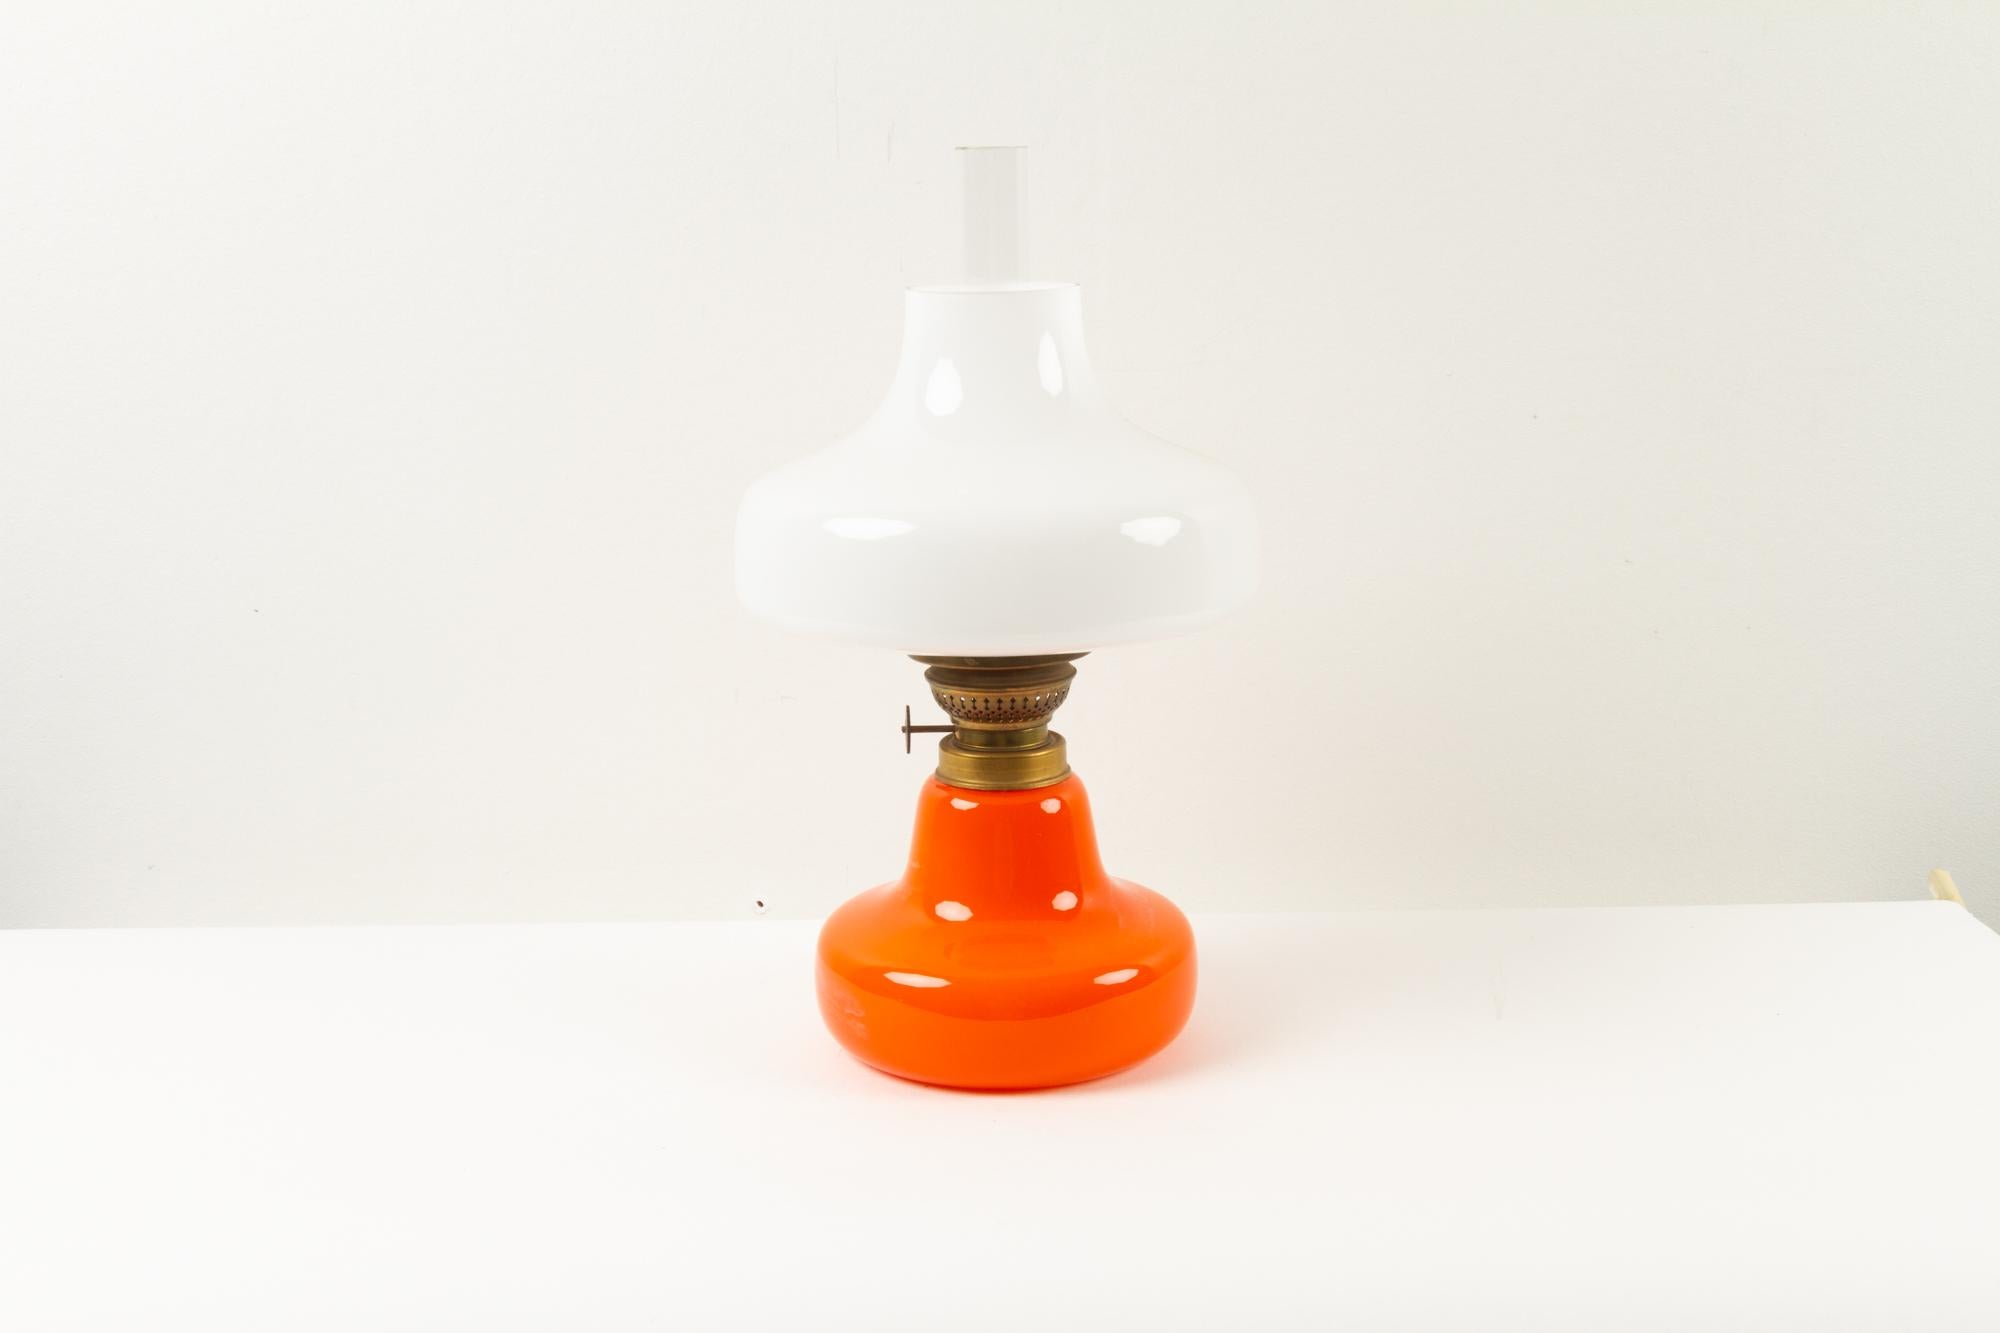 Vintage Danish orange Oline oil lamp by Fog & Mørup 1960s
Danish Mid-Century Modern table lamp in hand blown orange and opaline glass. Burner in brass.
Beautiful vivid orange glass base.
Good original condition. One very small nick on edge of